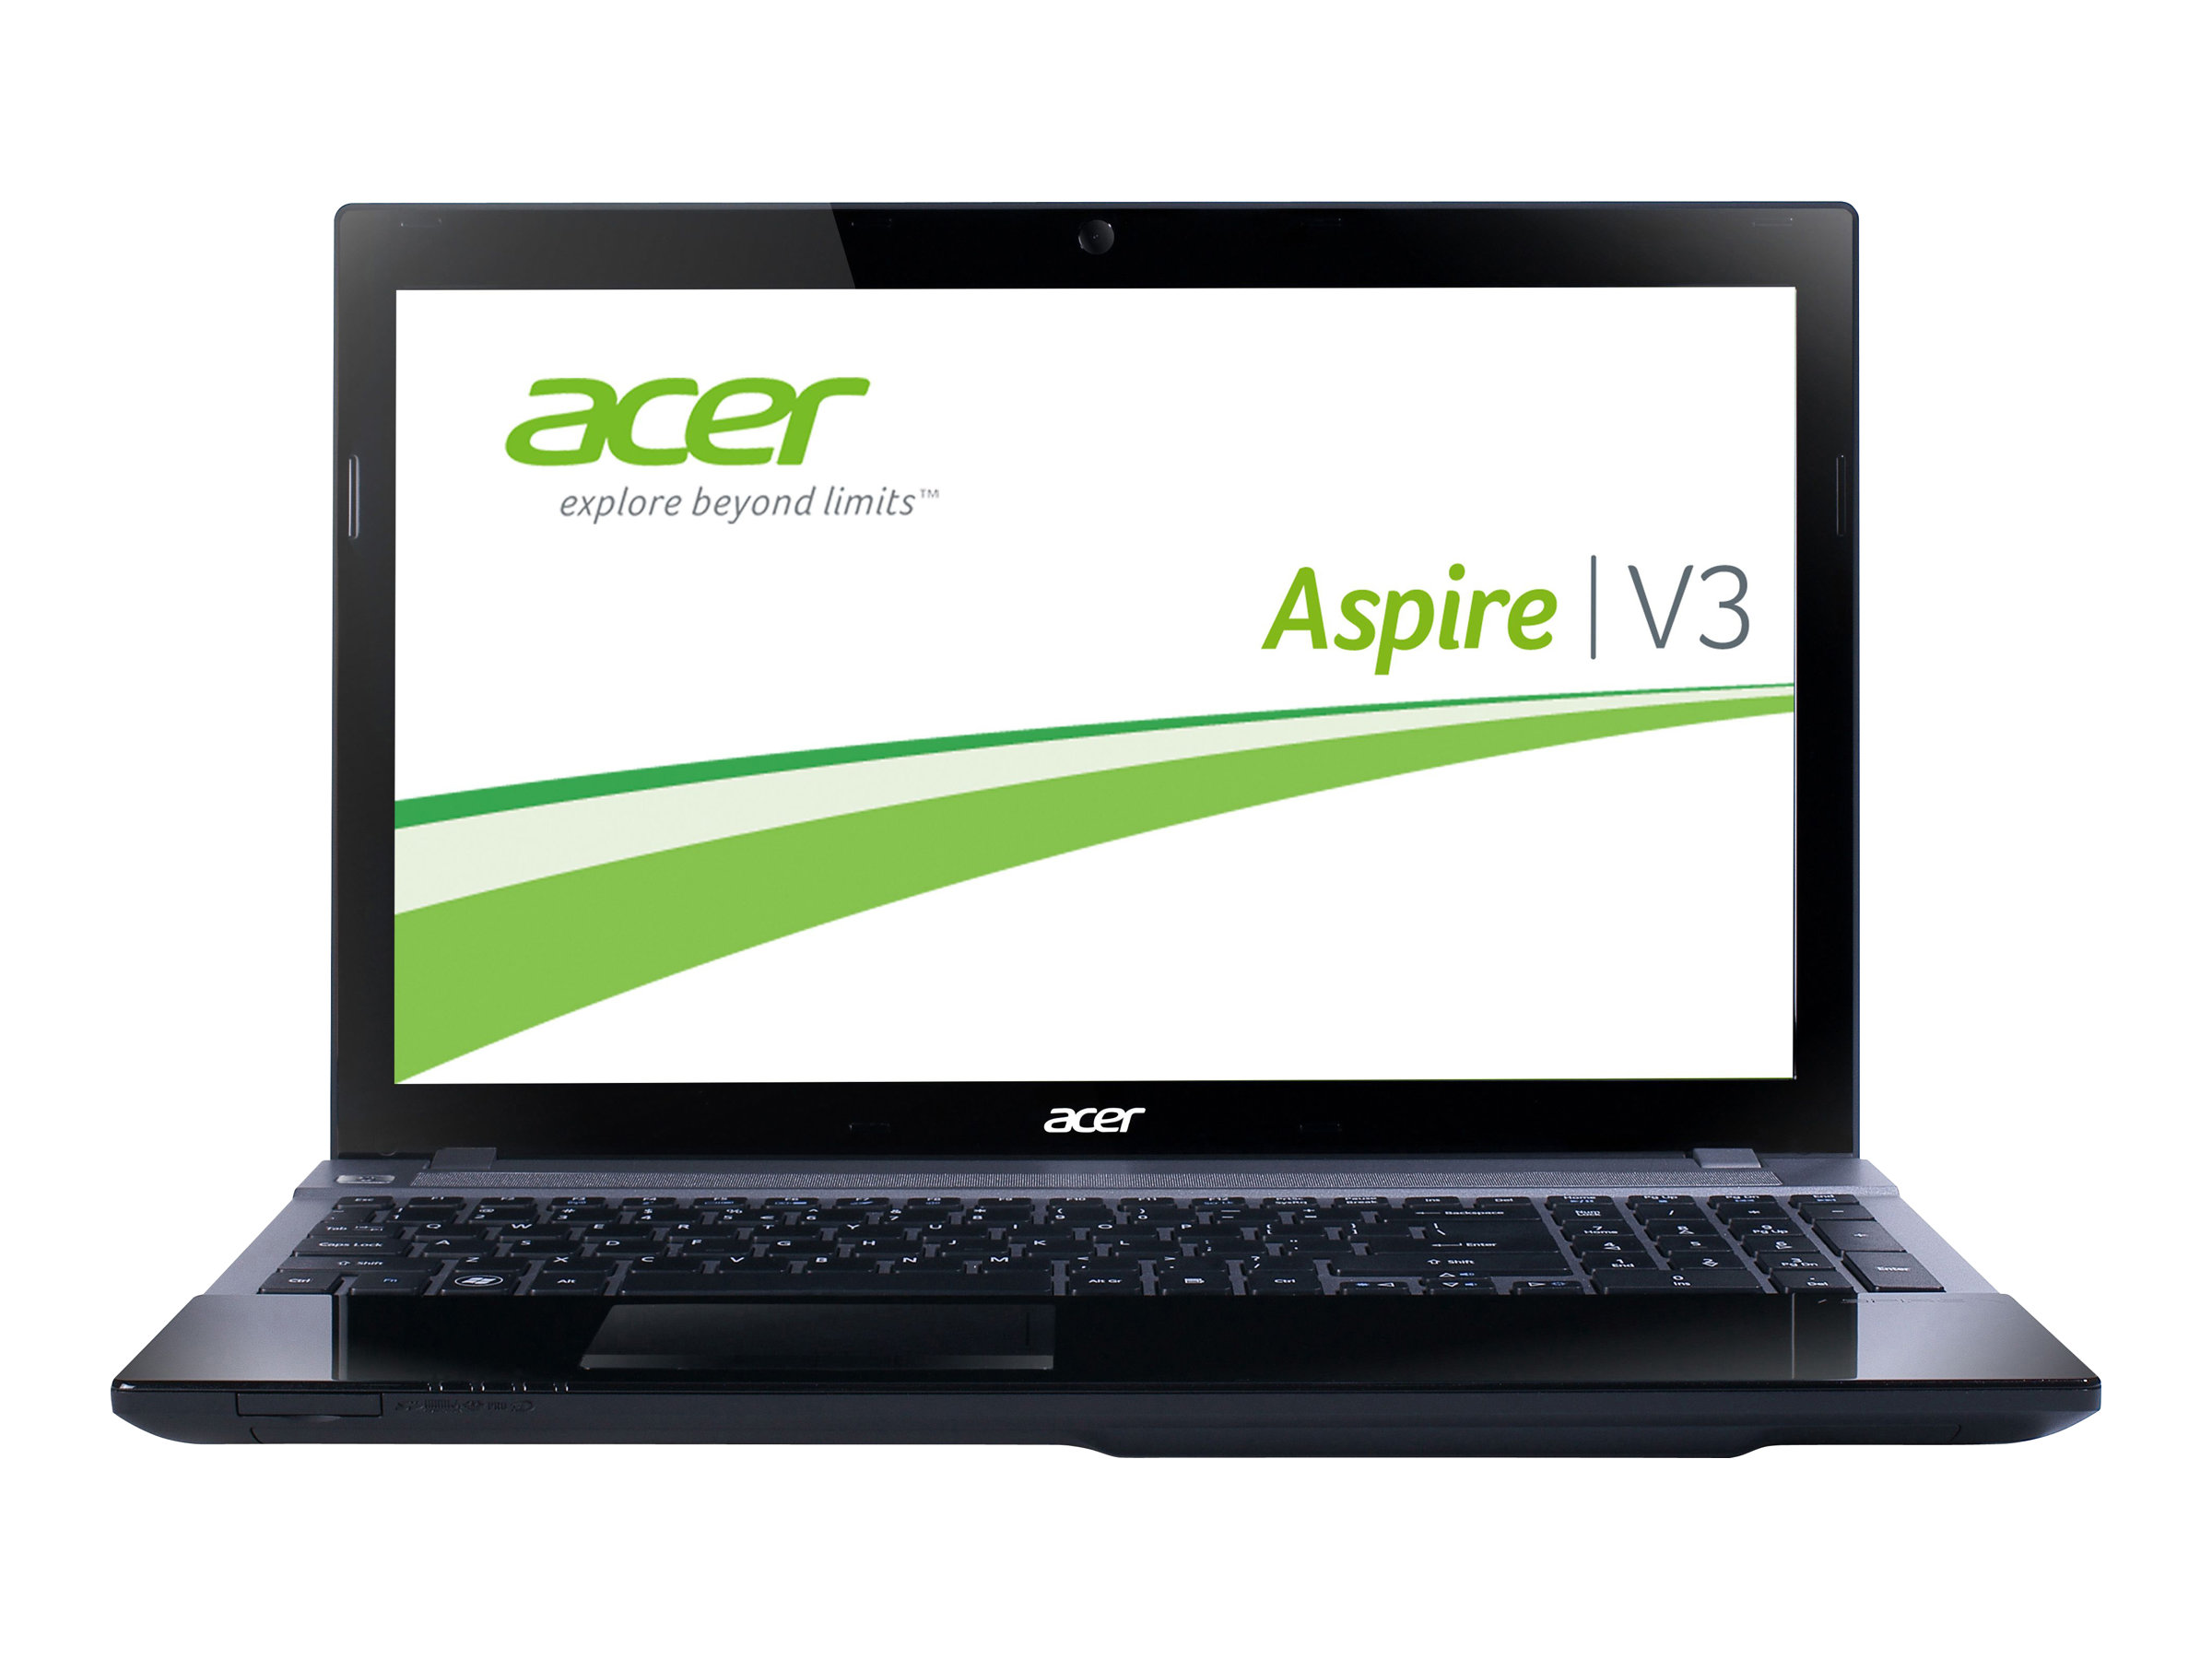 Acer Aspire V3 (531)